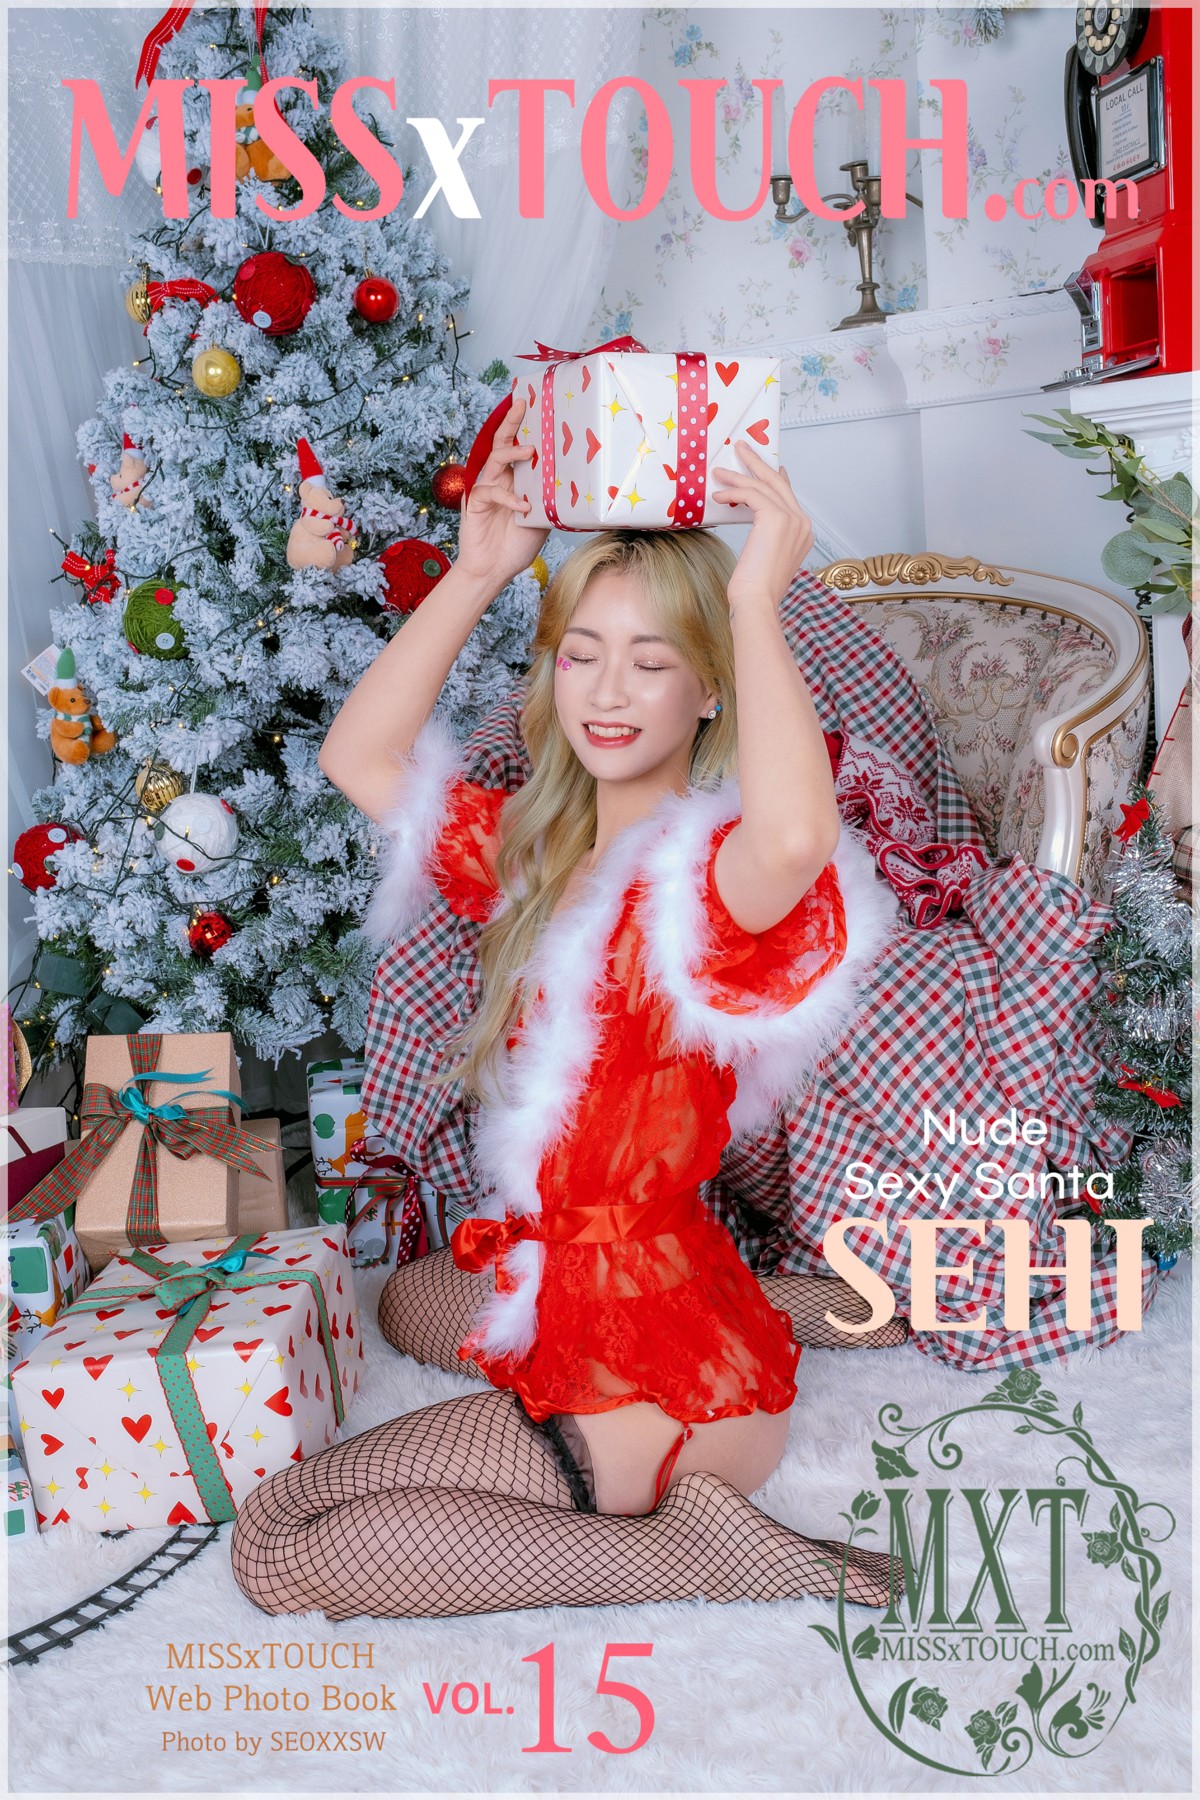 Sehi 세희, MISS TOUCH Vol.15 “Sexy Santa” Set.02